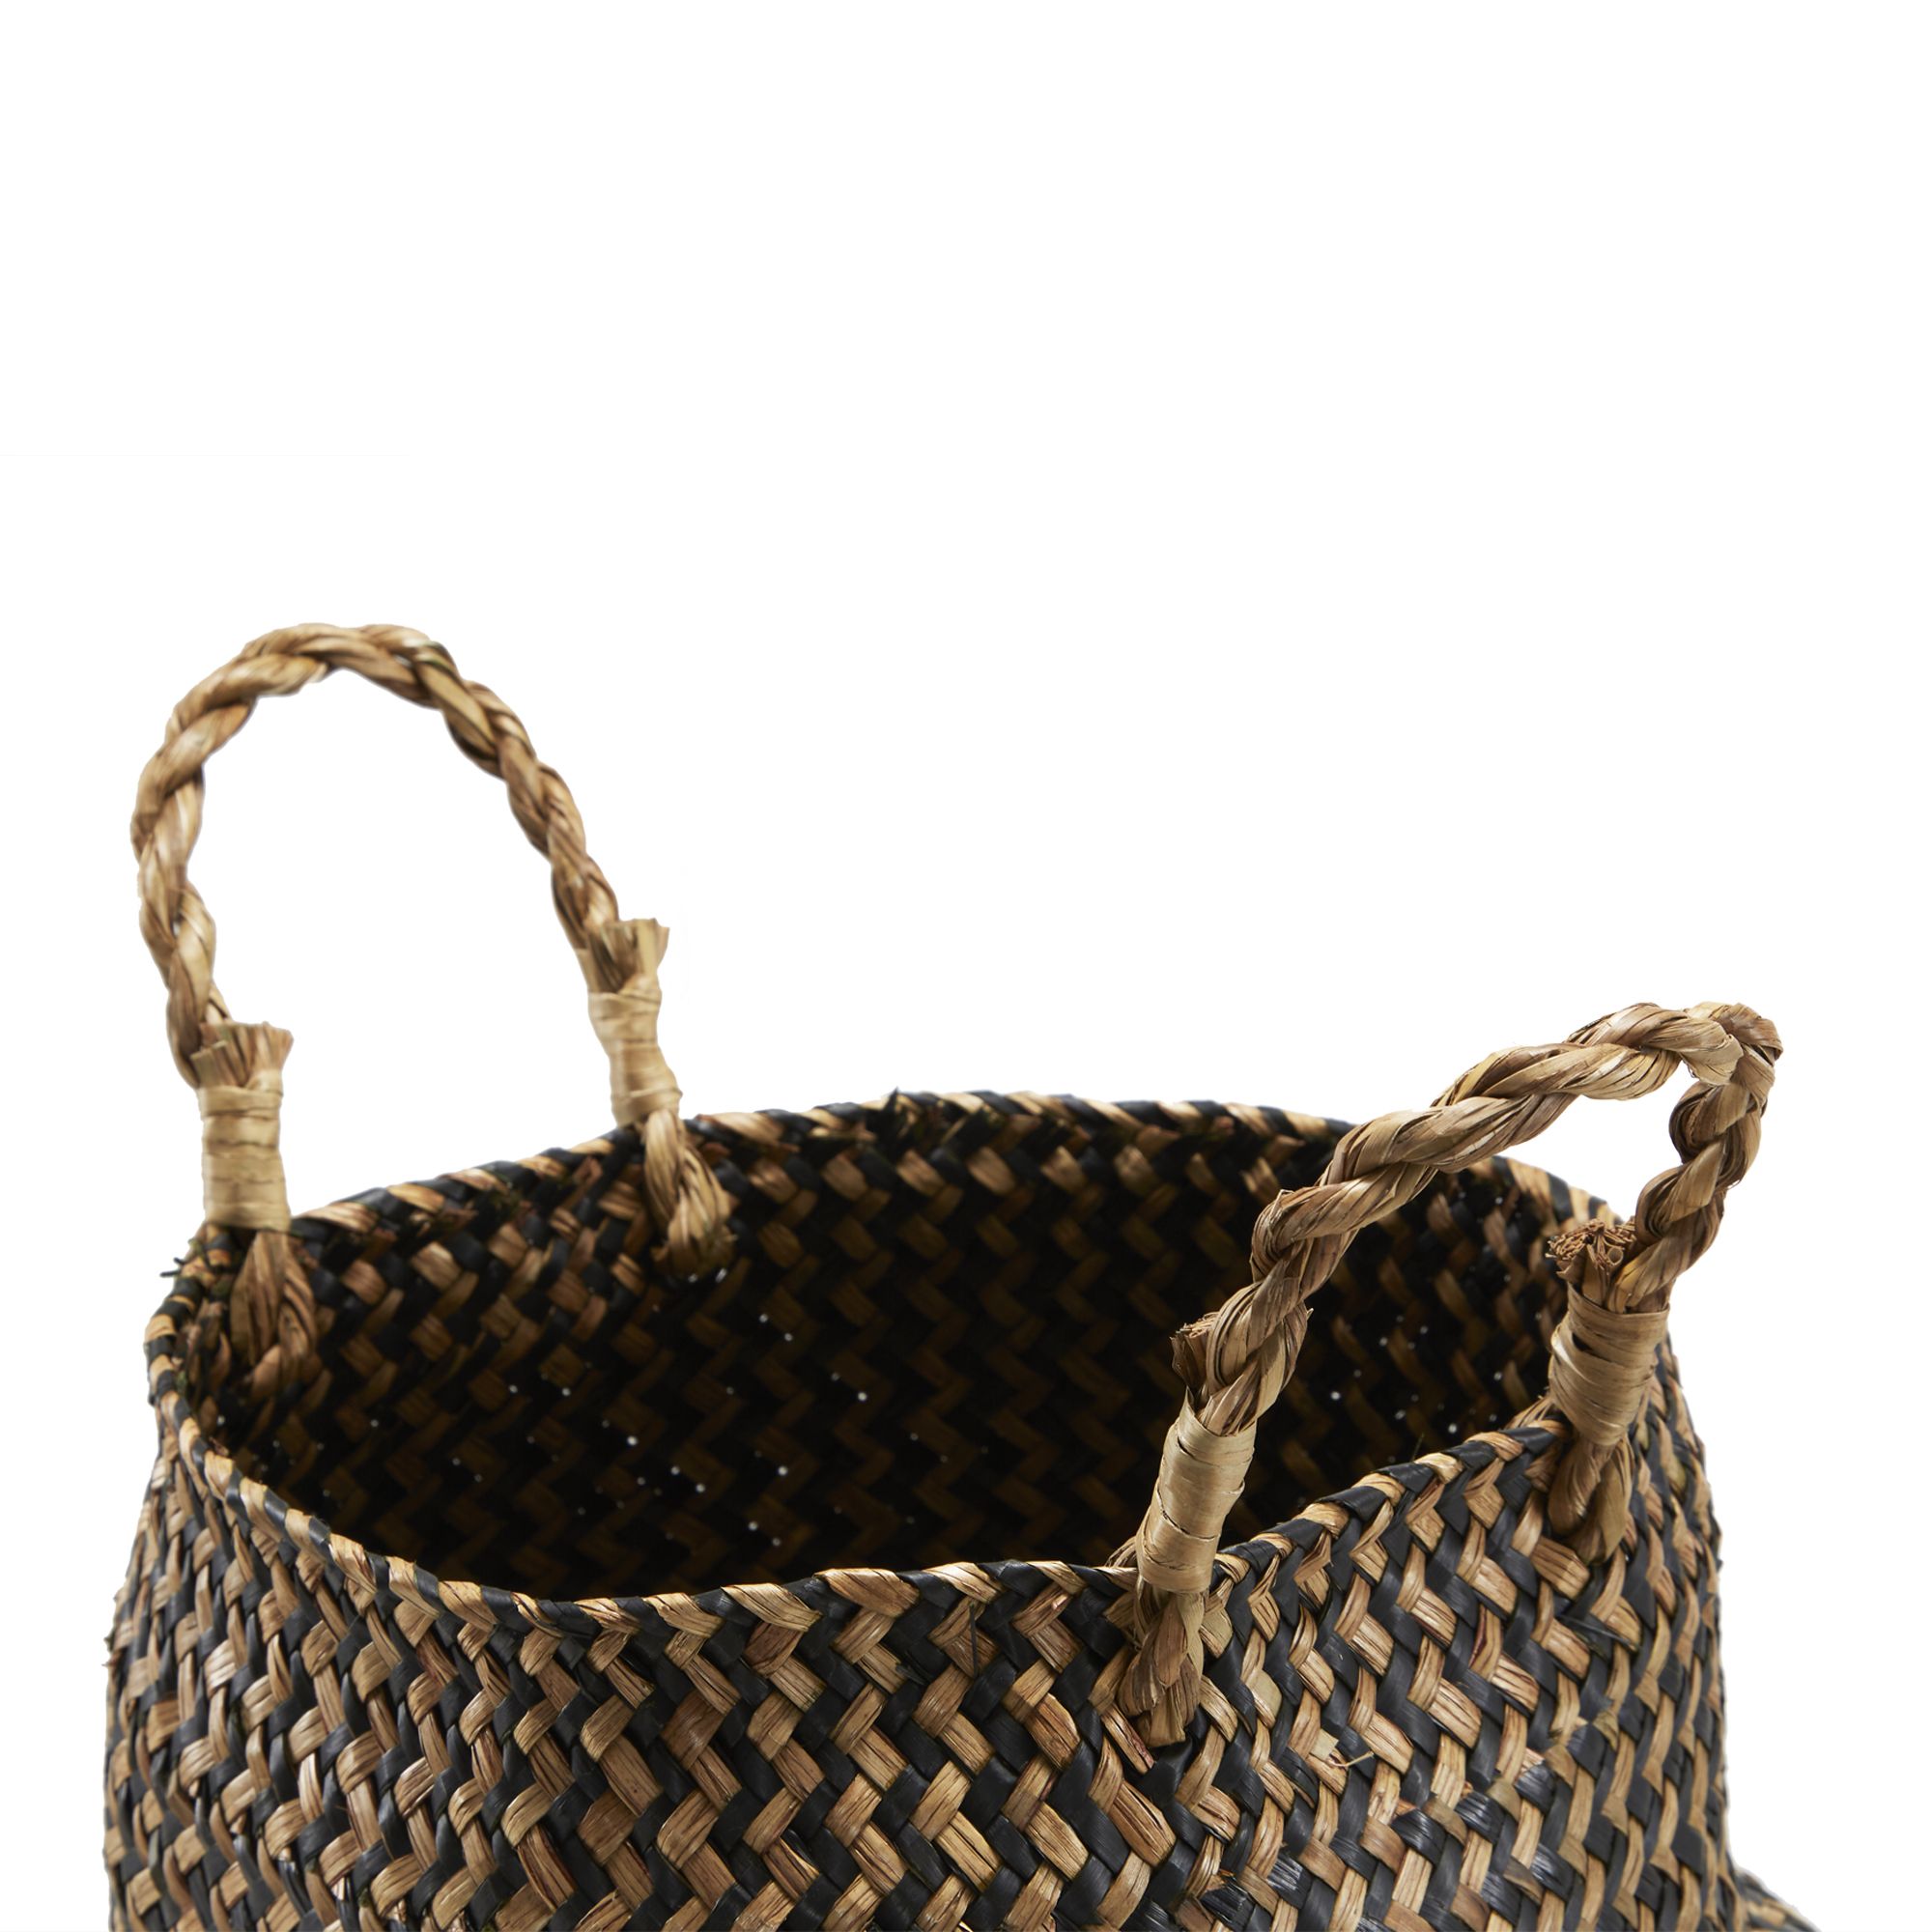 GoodHome Mixxit Zig zag Natural Seagrass Storage basket (H)36cm (W)30cm (D)30cm